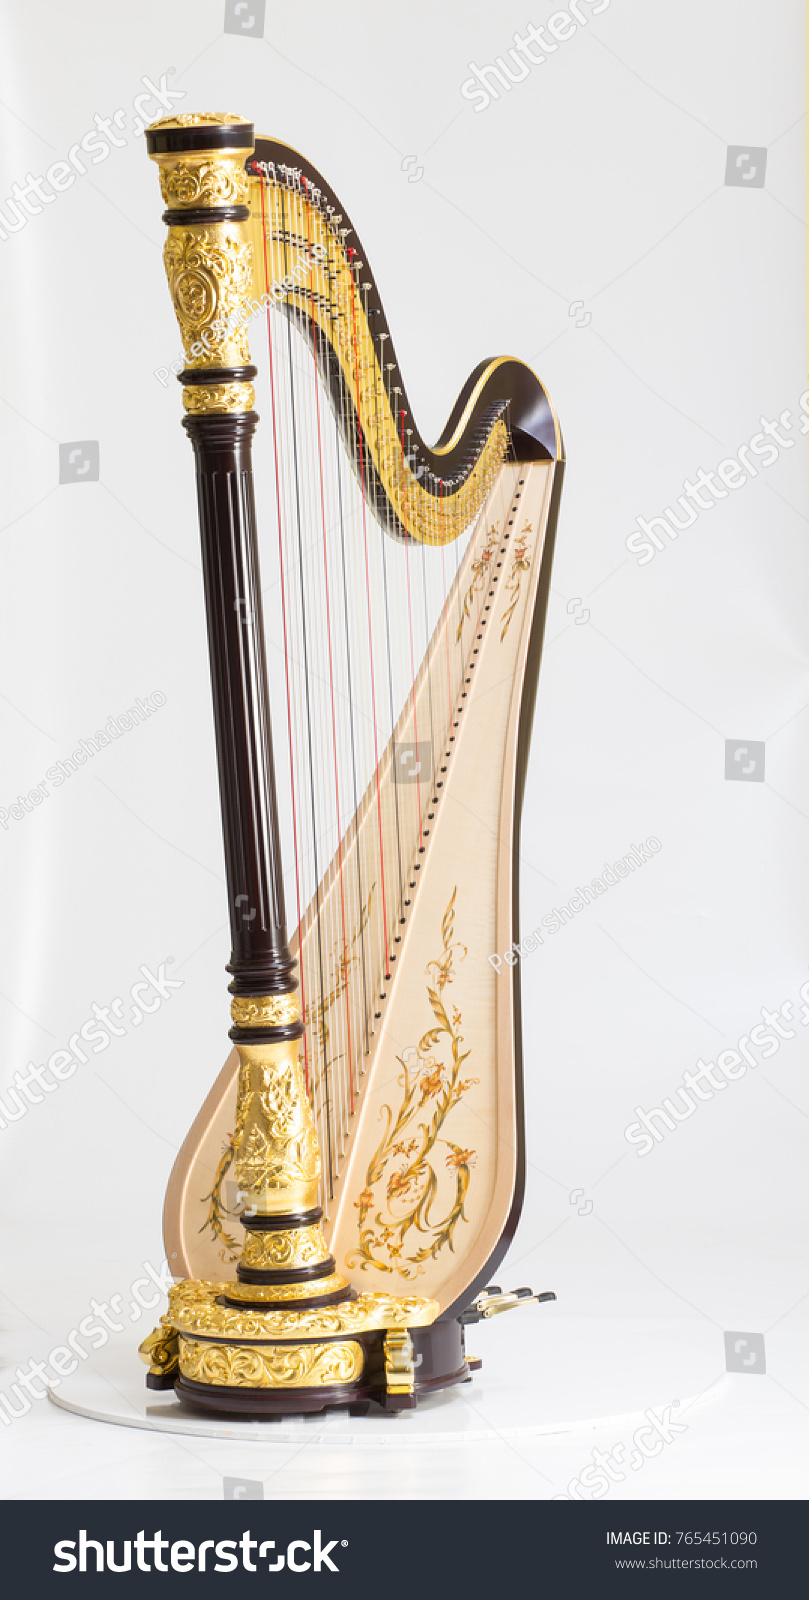 Classical music instrument. Pedal harp #765451090